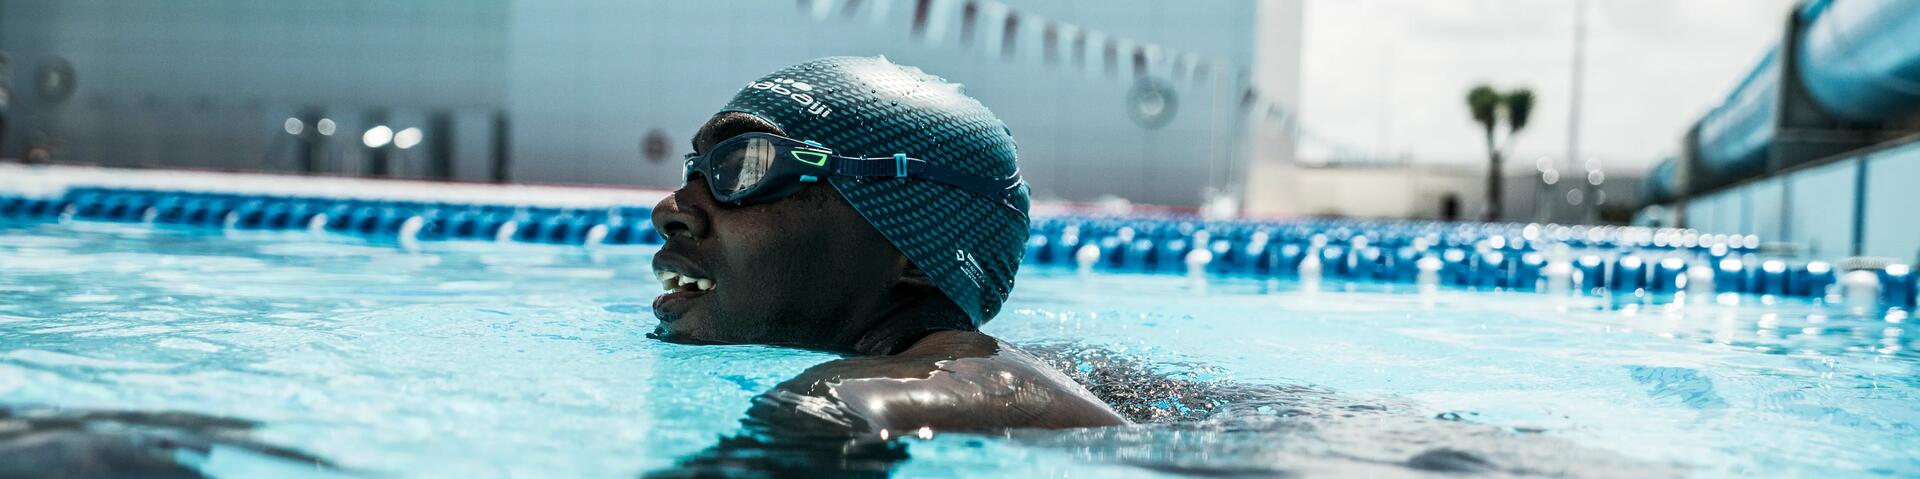 Hoe motiveer je jezelf om te gaan zwemmen? 